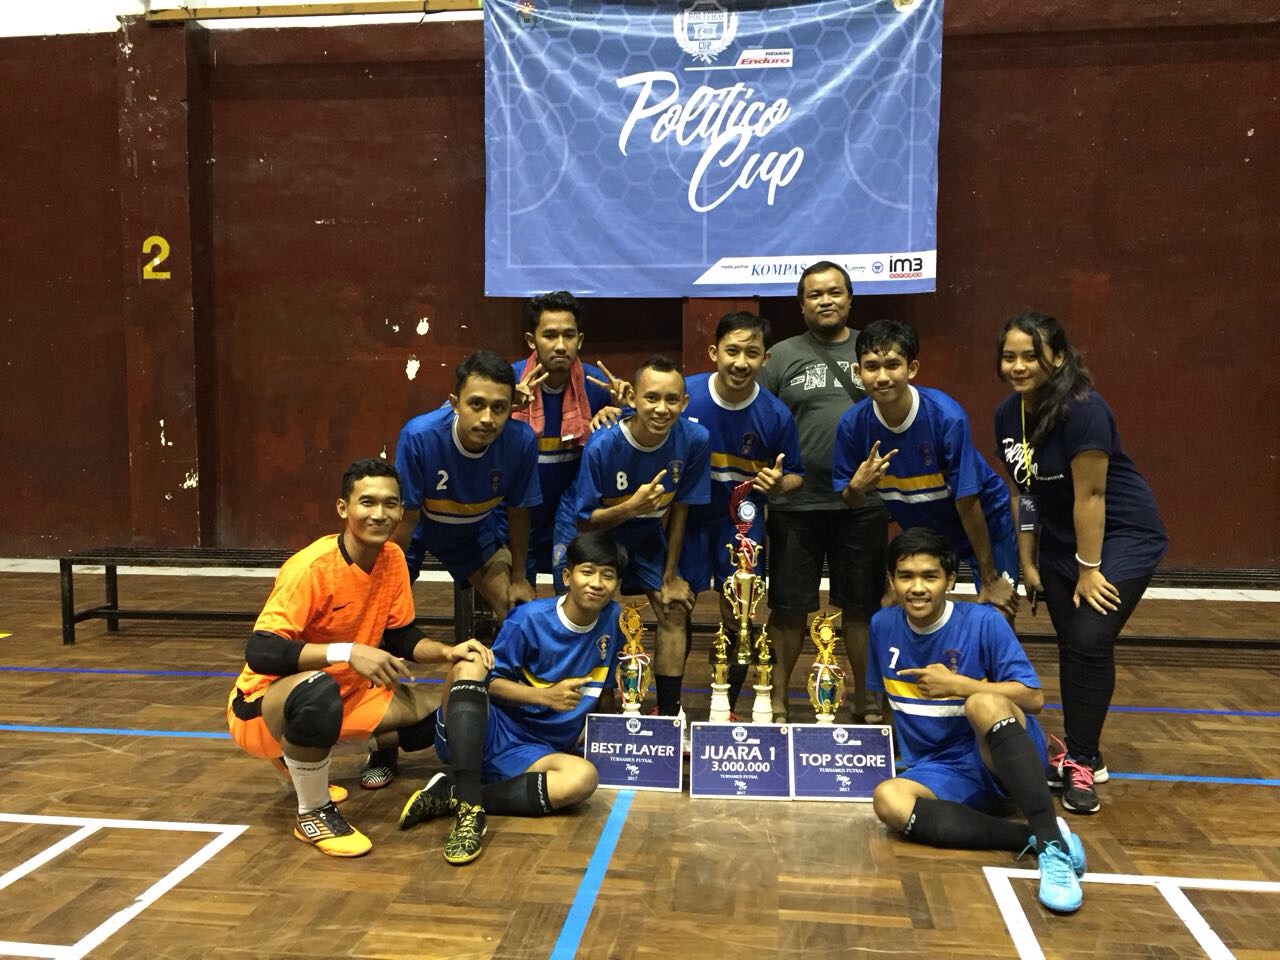 Foto Kejurnas Turnamen Futsal Politico Cup 2017